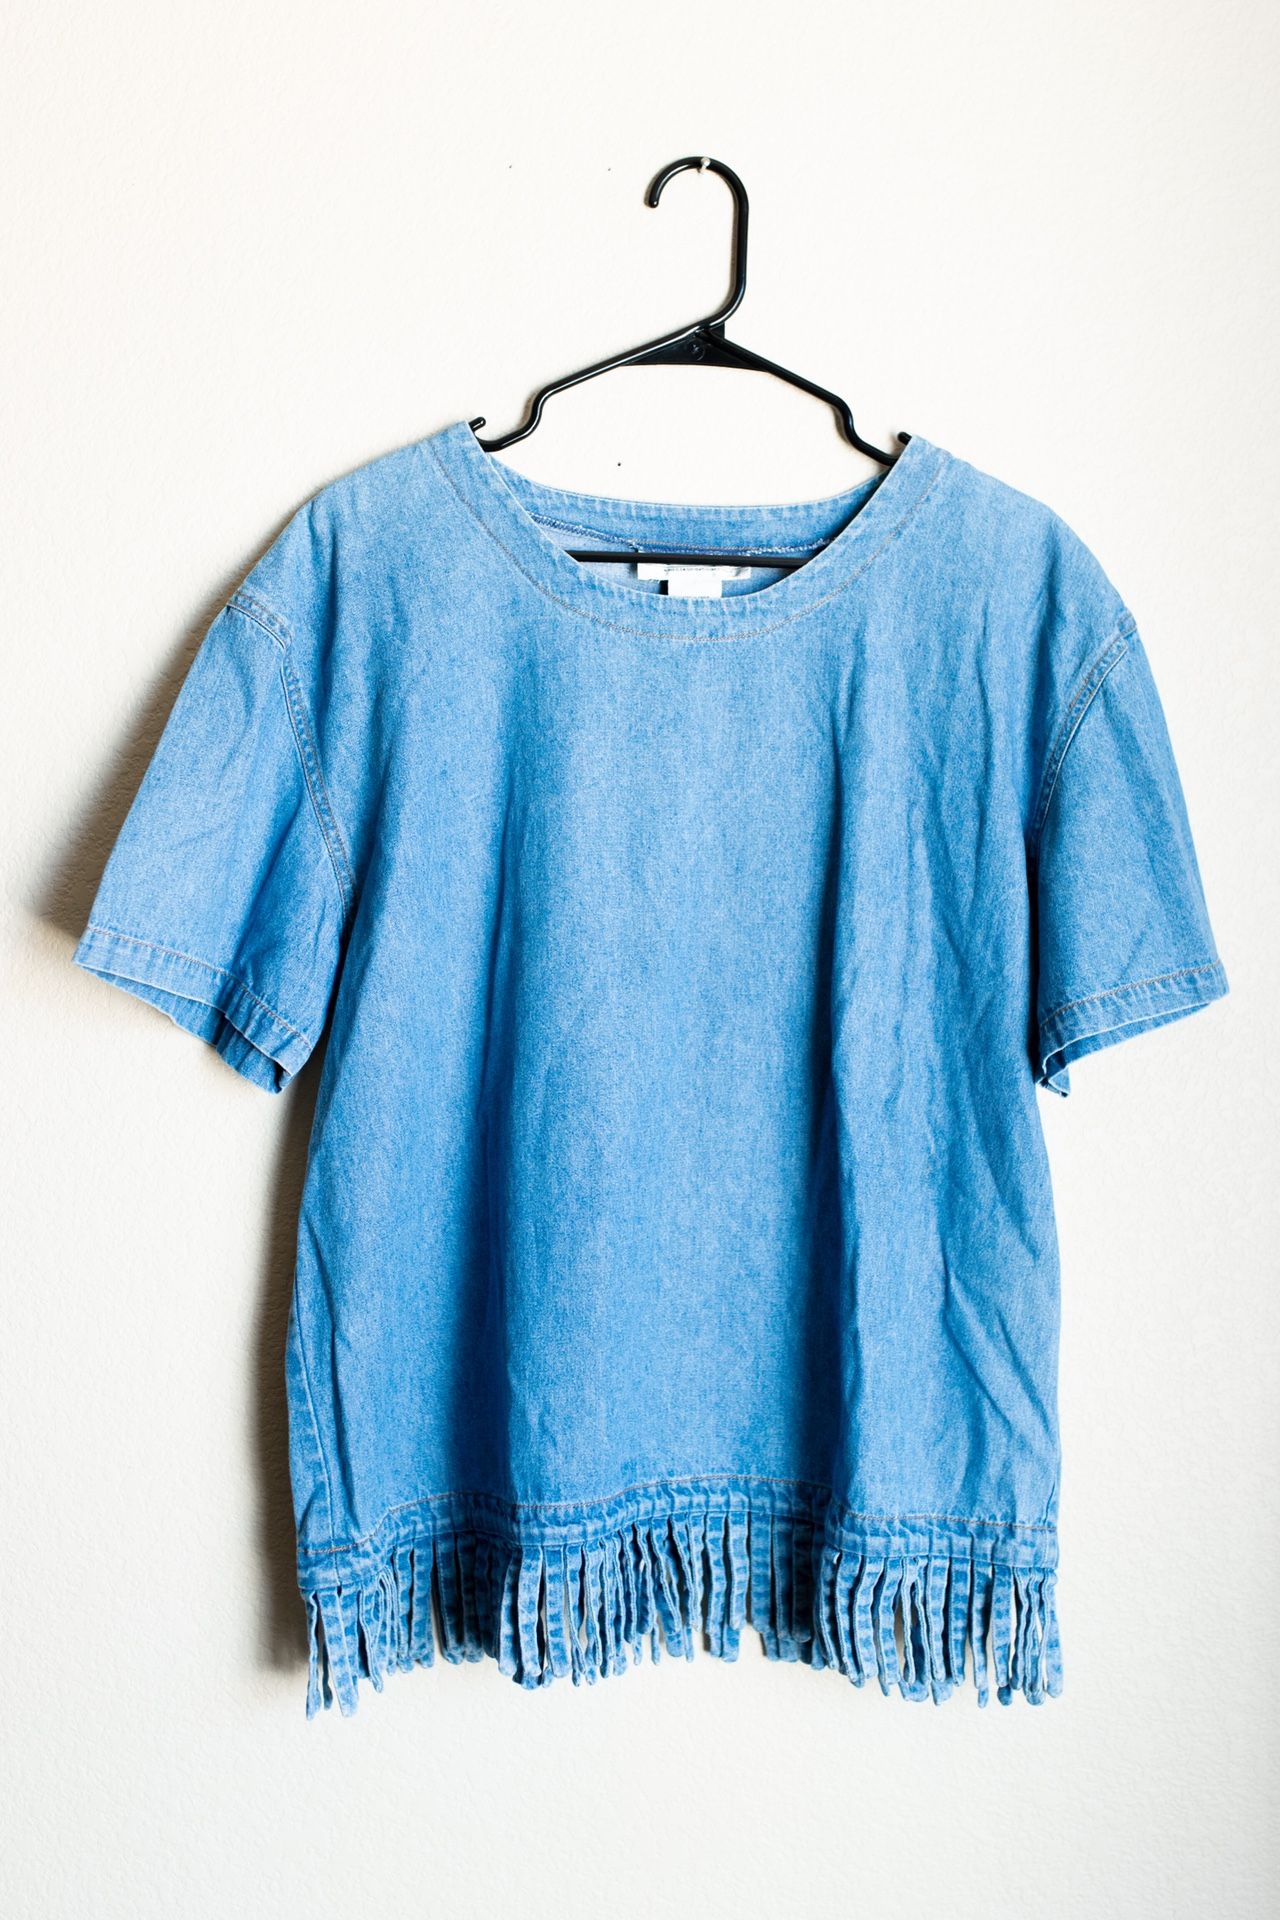 Drapers & Damon’s Blue Denim Jean Short Sleeve Shirt Blouse With Fringe Size Medium